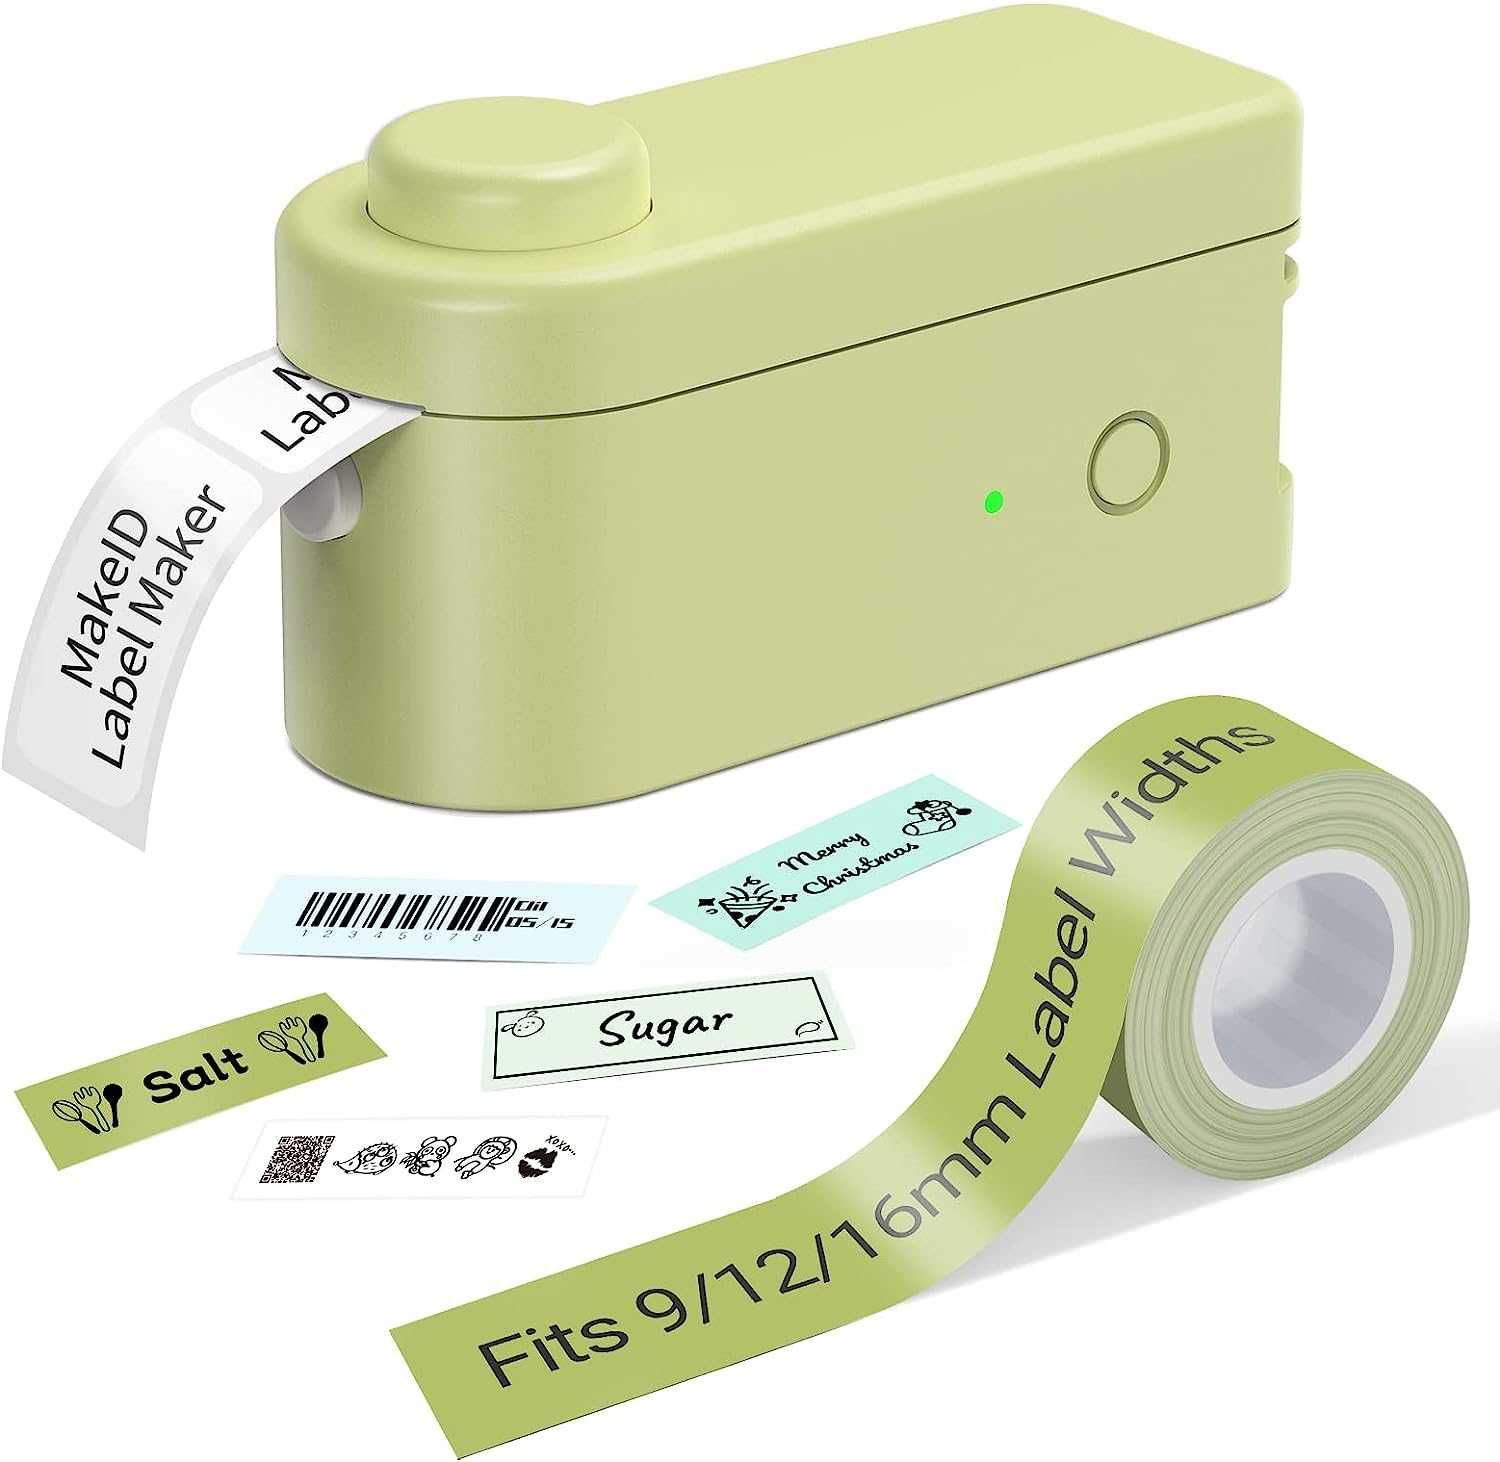 Makeid Etiquetadora Bluetooth portátil, mini impressora